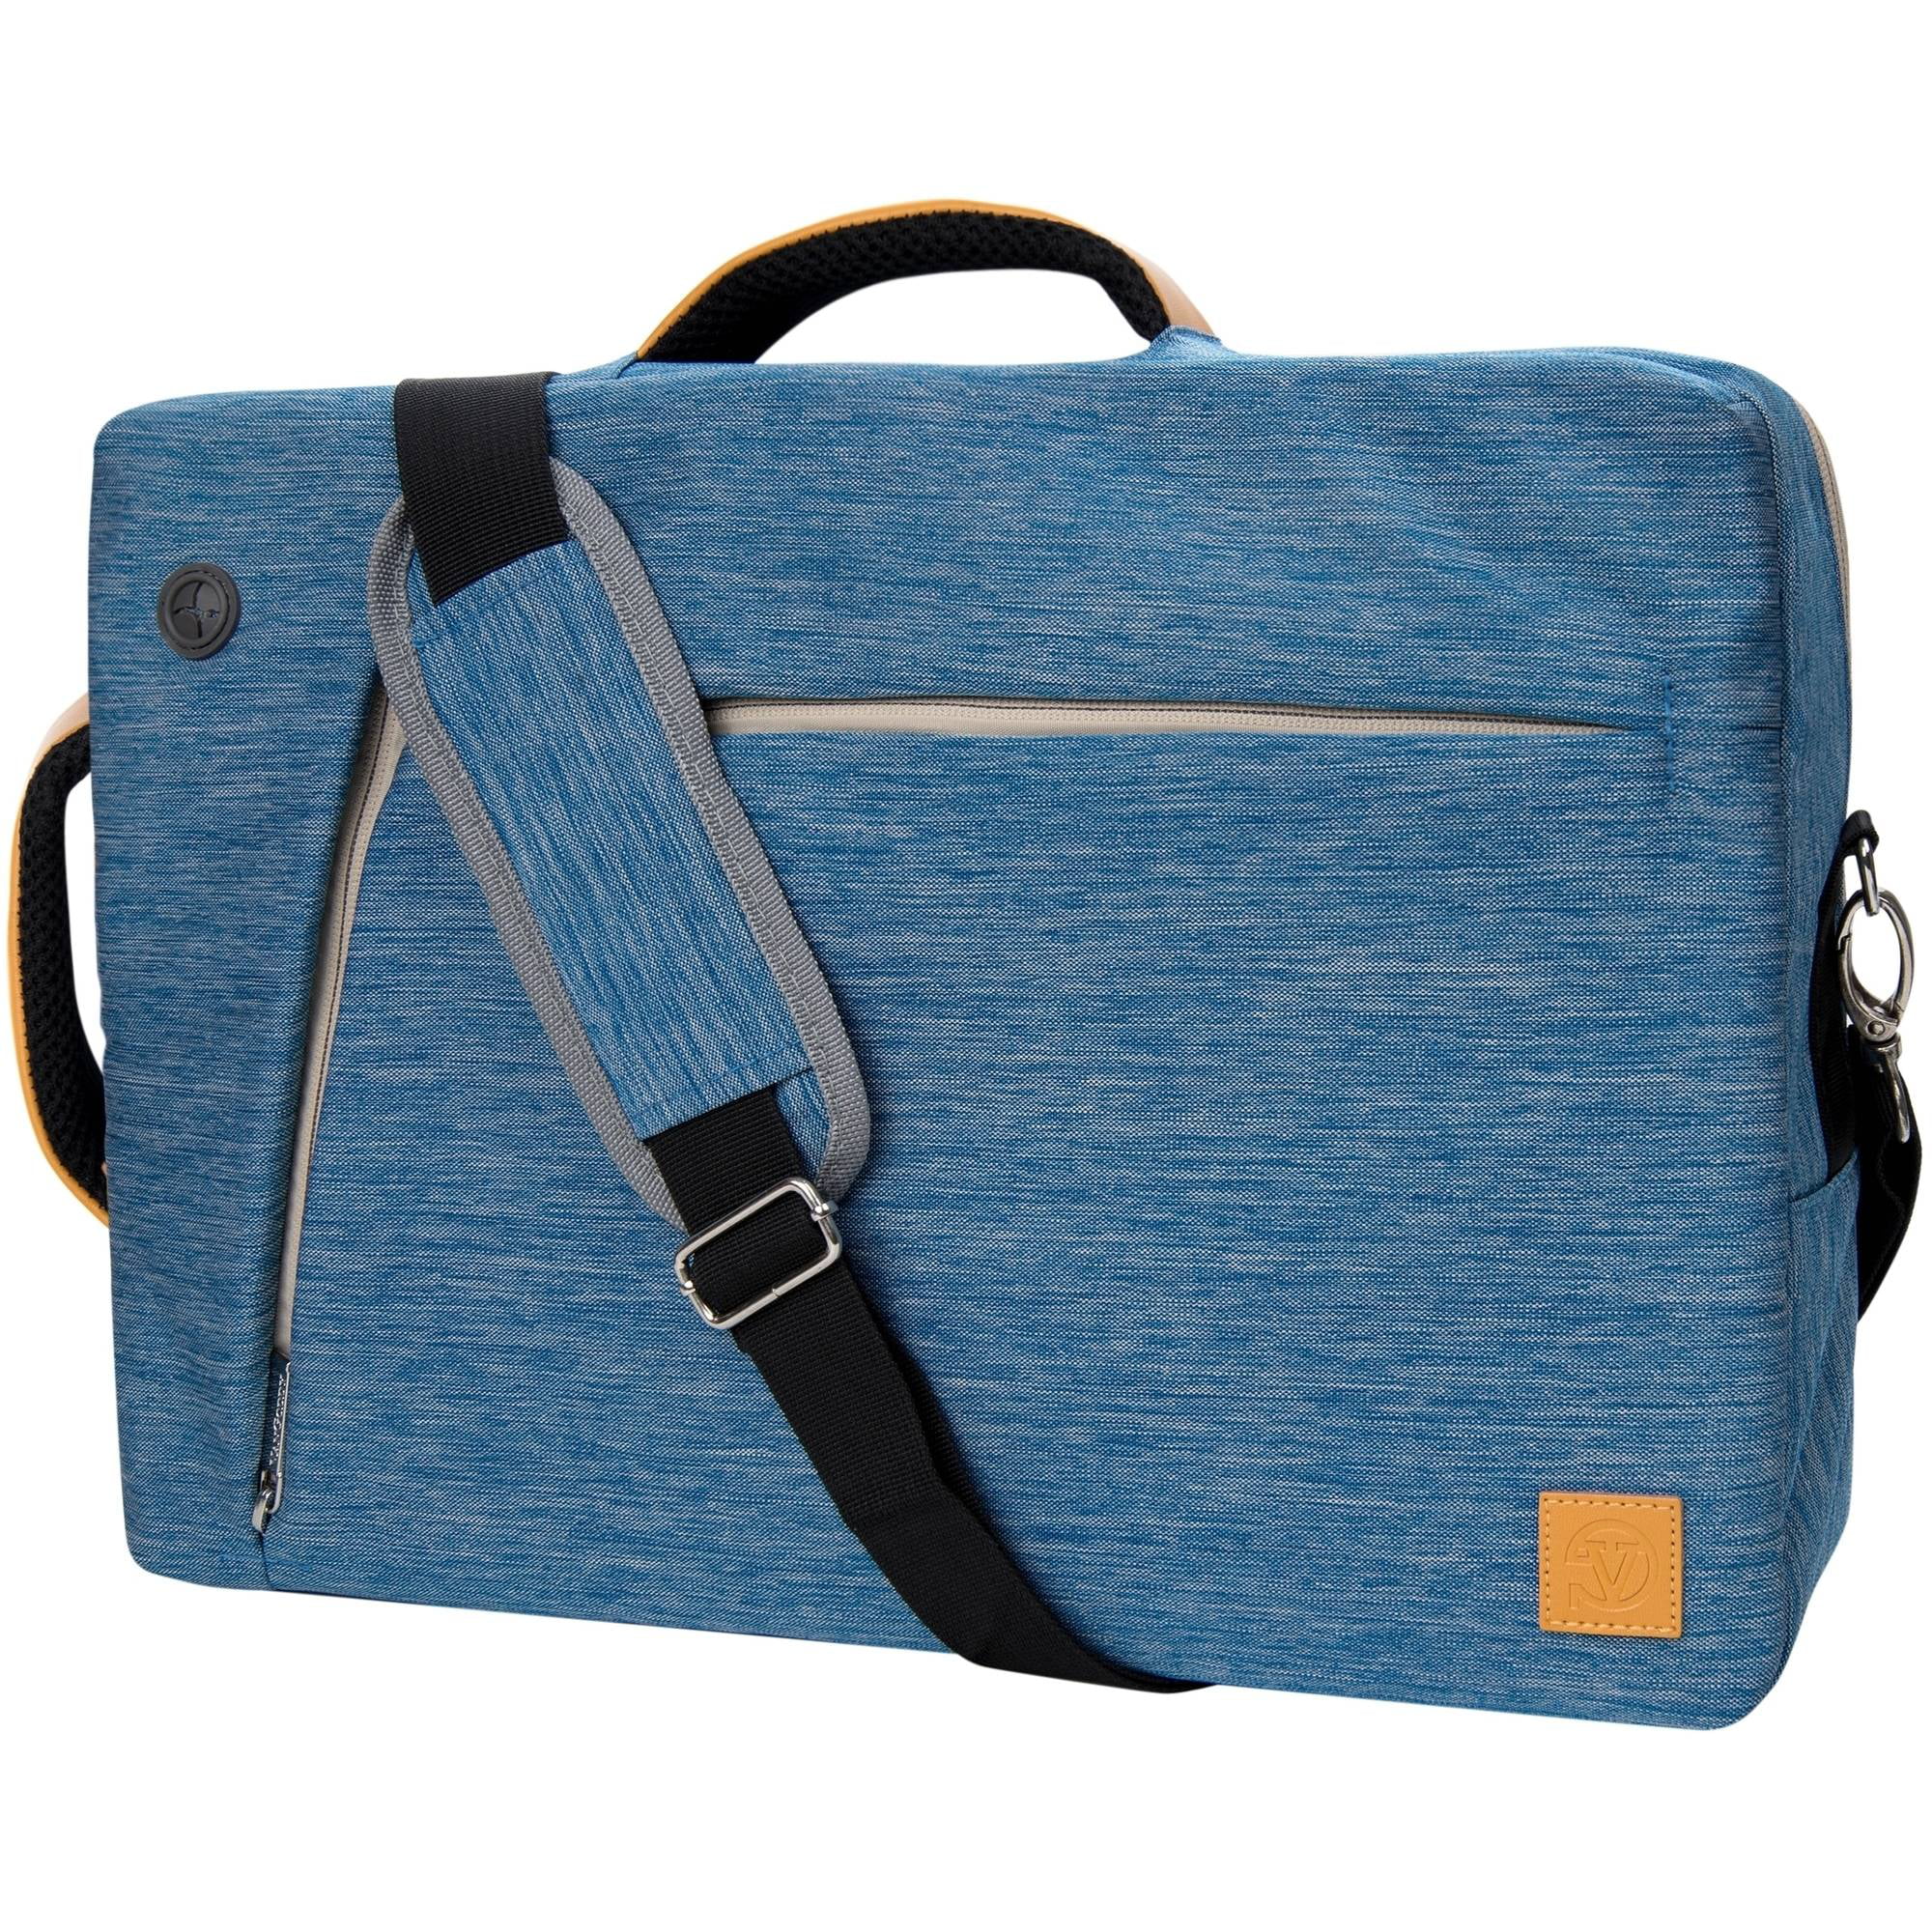 Laptop Messenger Hand Drawn Ethnic Patterns Handbag Laptop Bag Compatible 13-13.3 inch MacBook Air Pro 13 inch